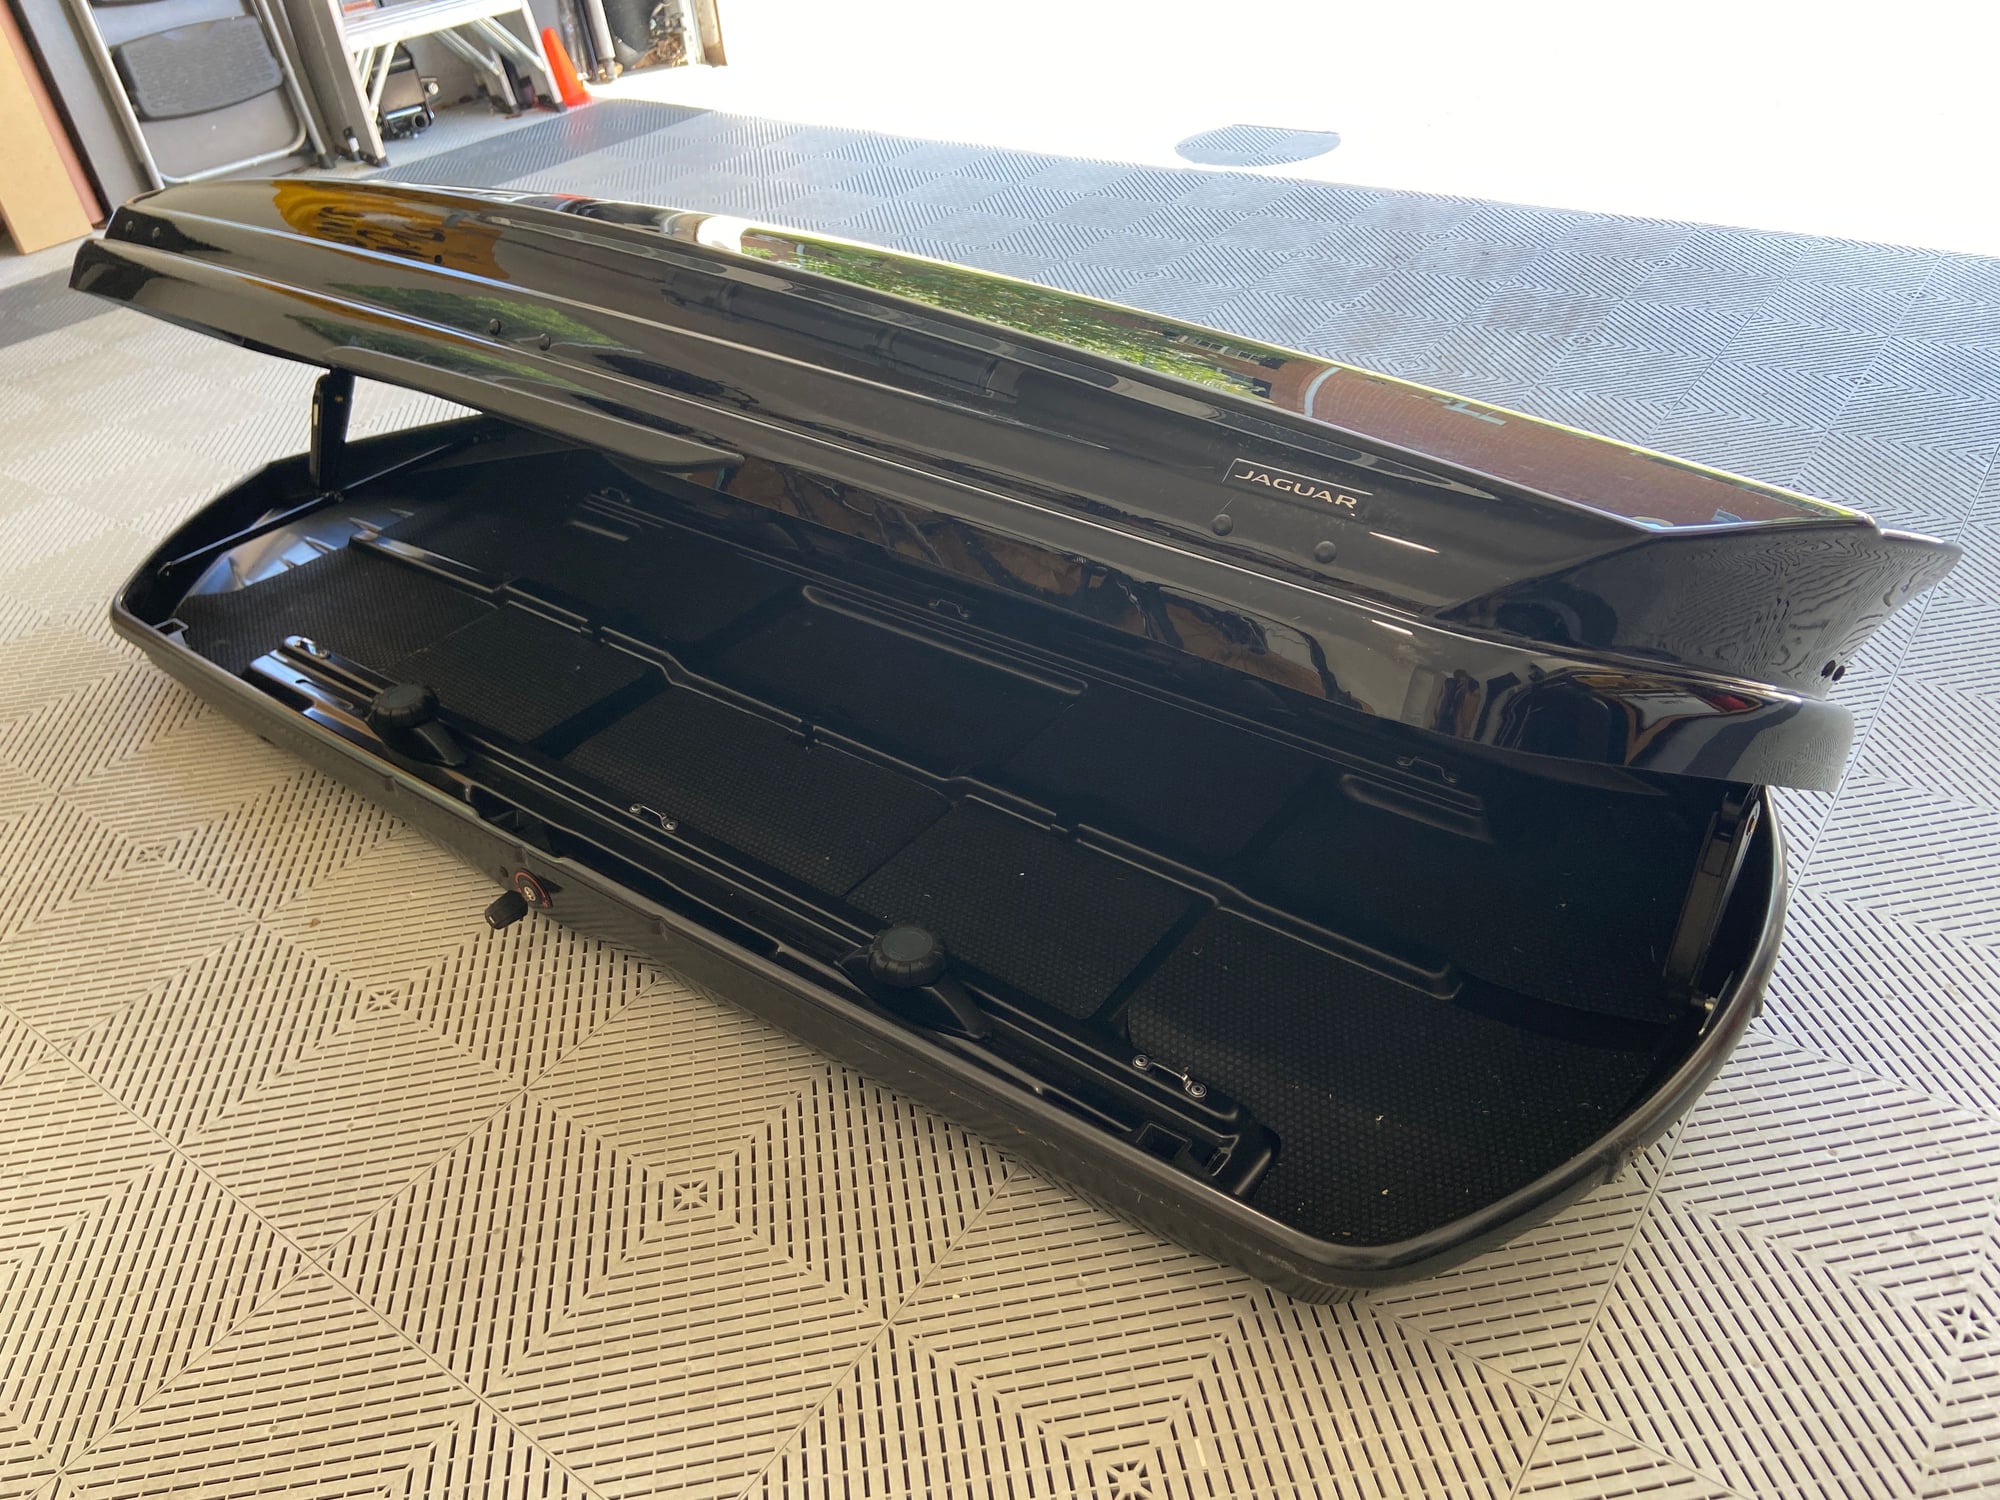 Accessories - Jaguar roof accessories (stowage box, cross bars, bike racks) - Used - 2018 to 2022 Jaguar XF - Nashville, TN 37221, United States